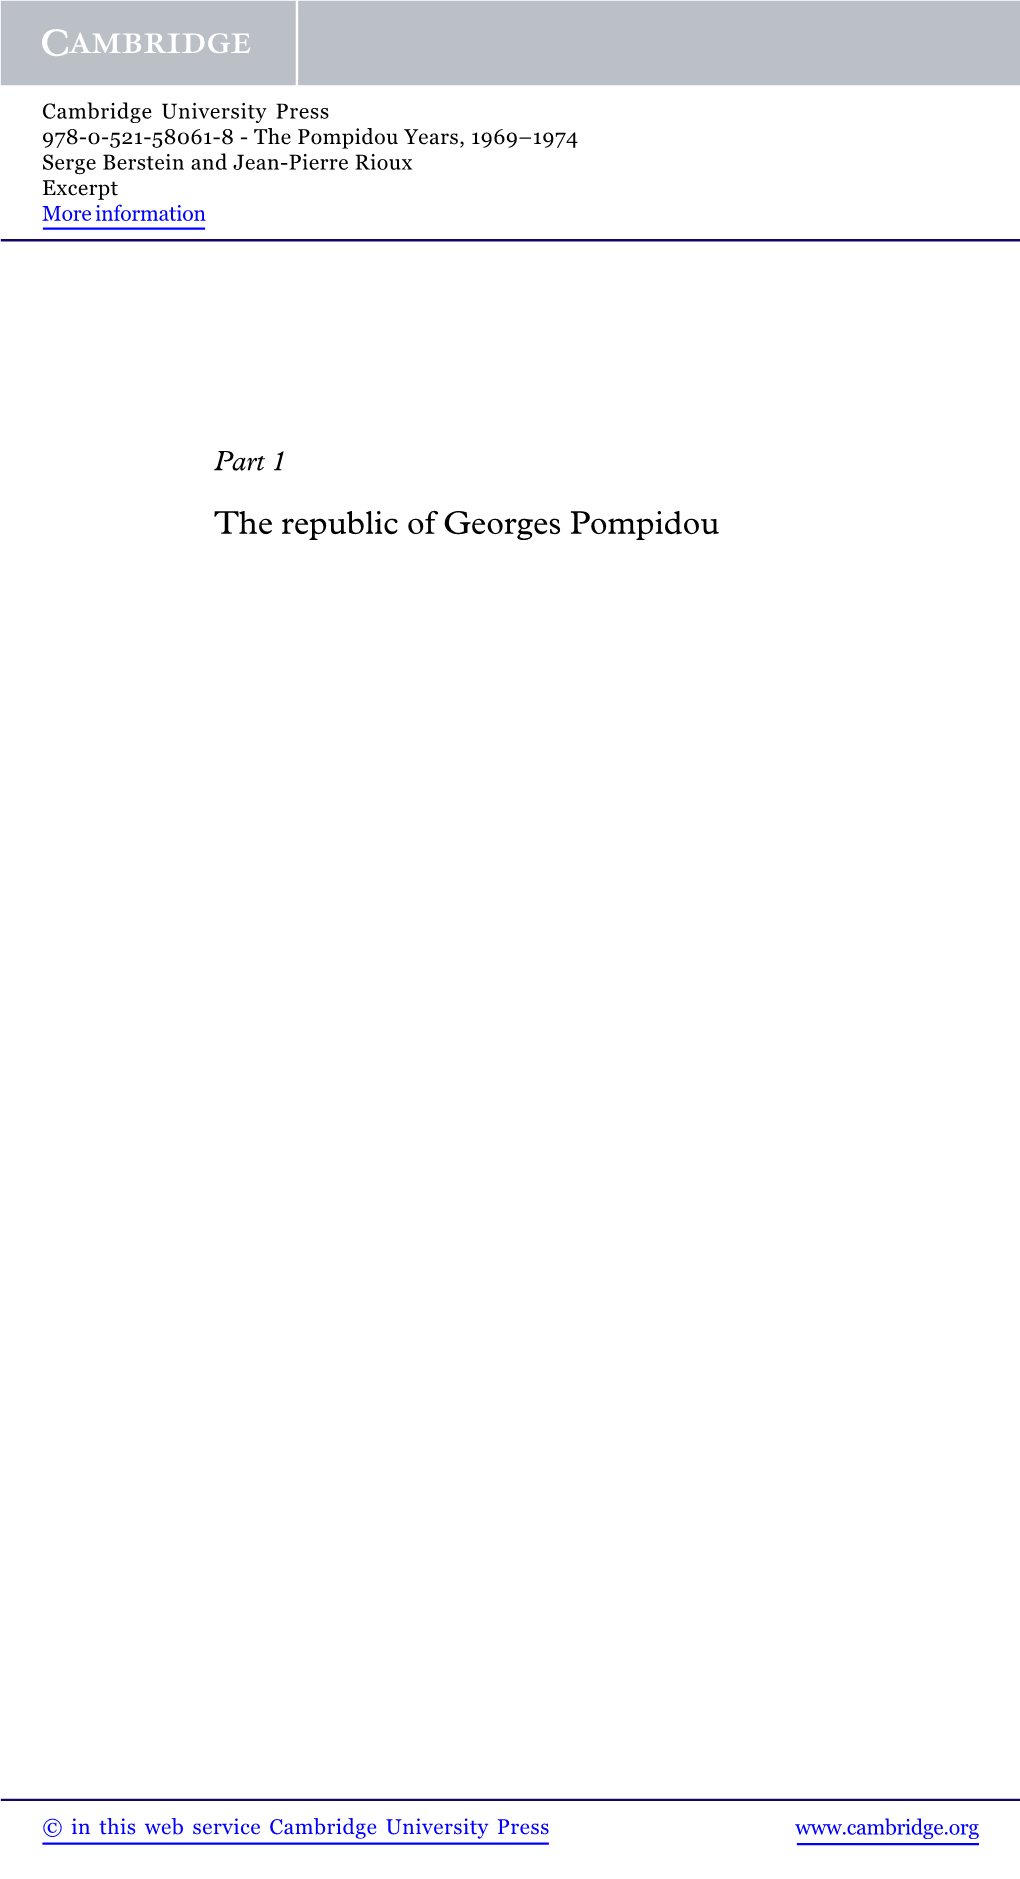 The Republic of Georges Pompidou